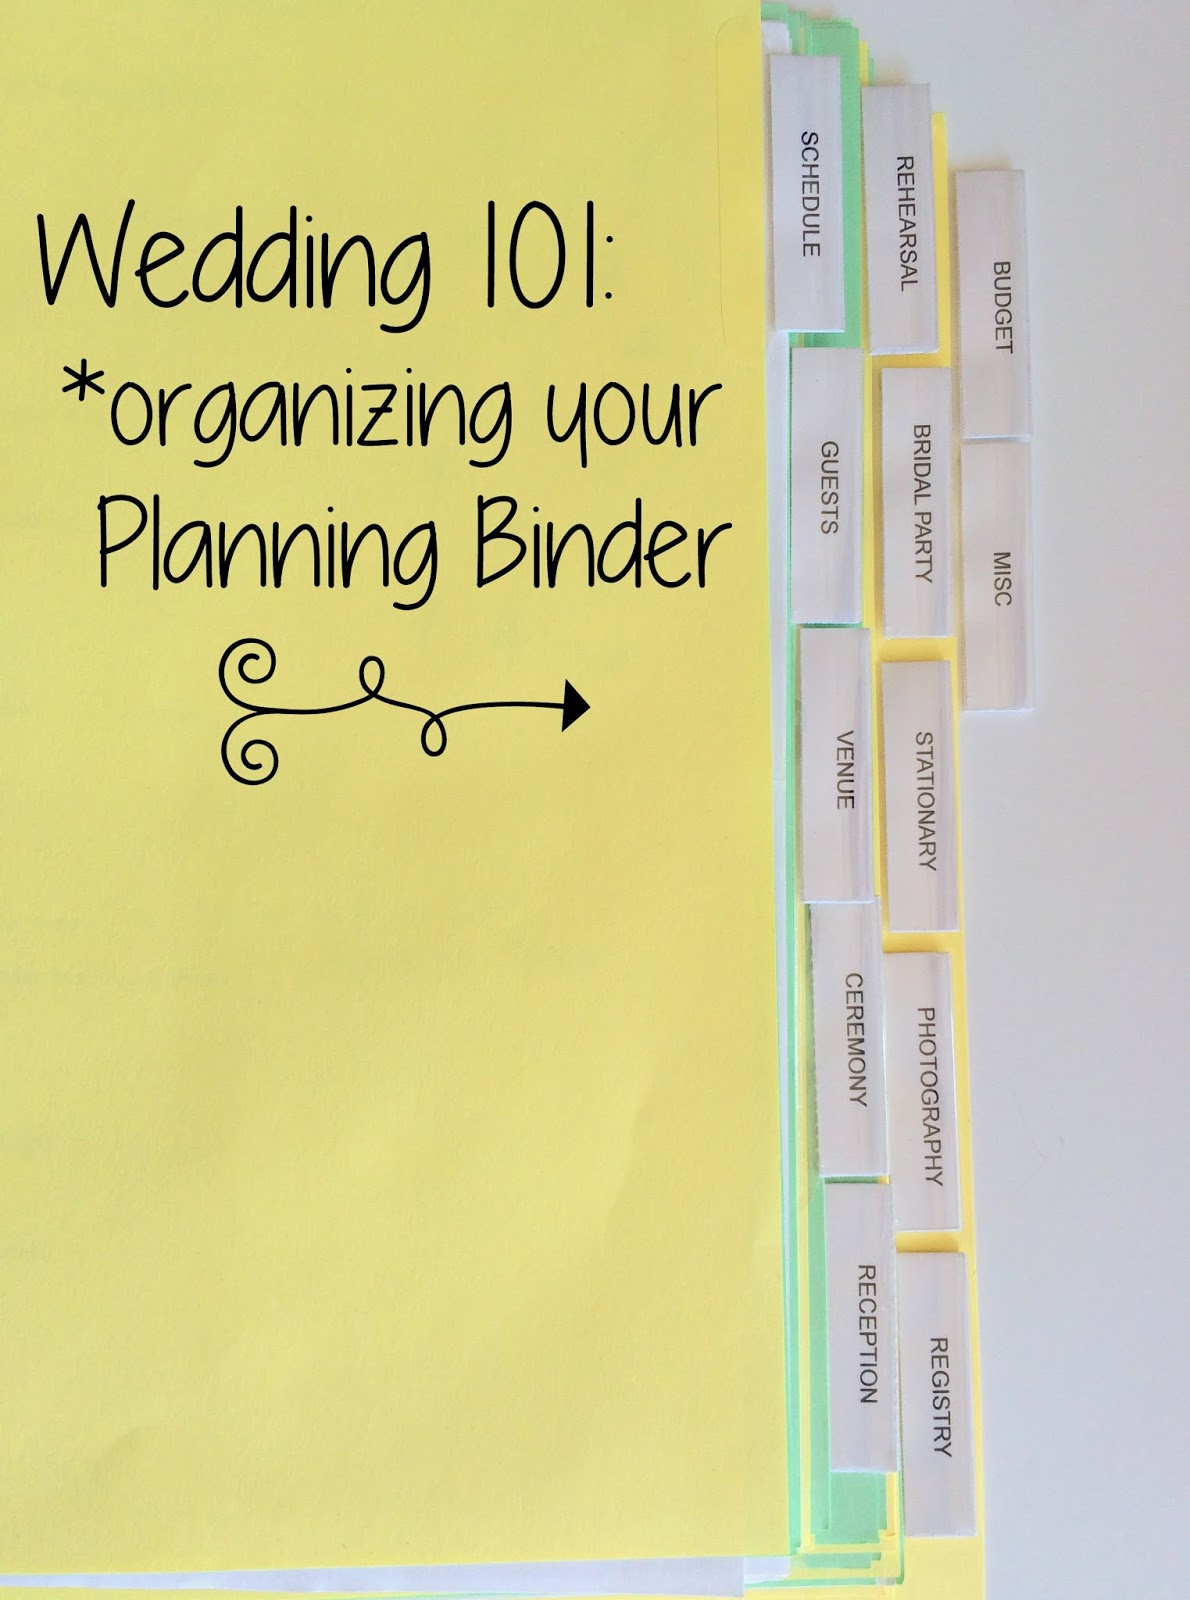 pies-etc-wedding-101-the-planning-binder